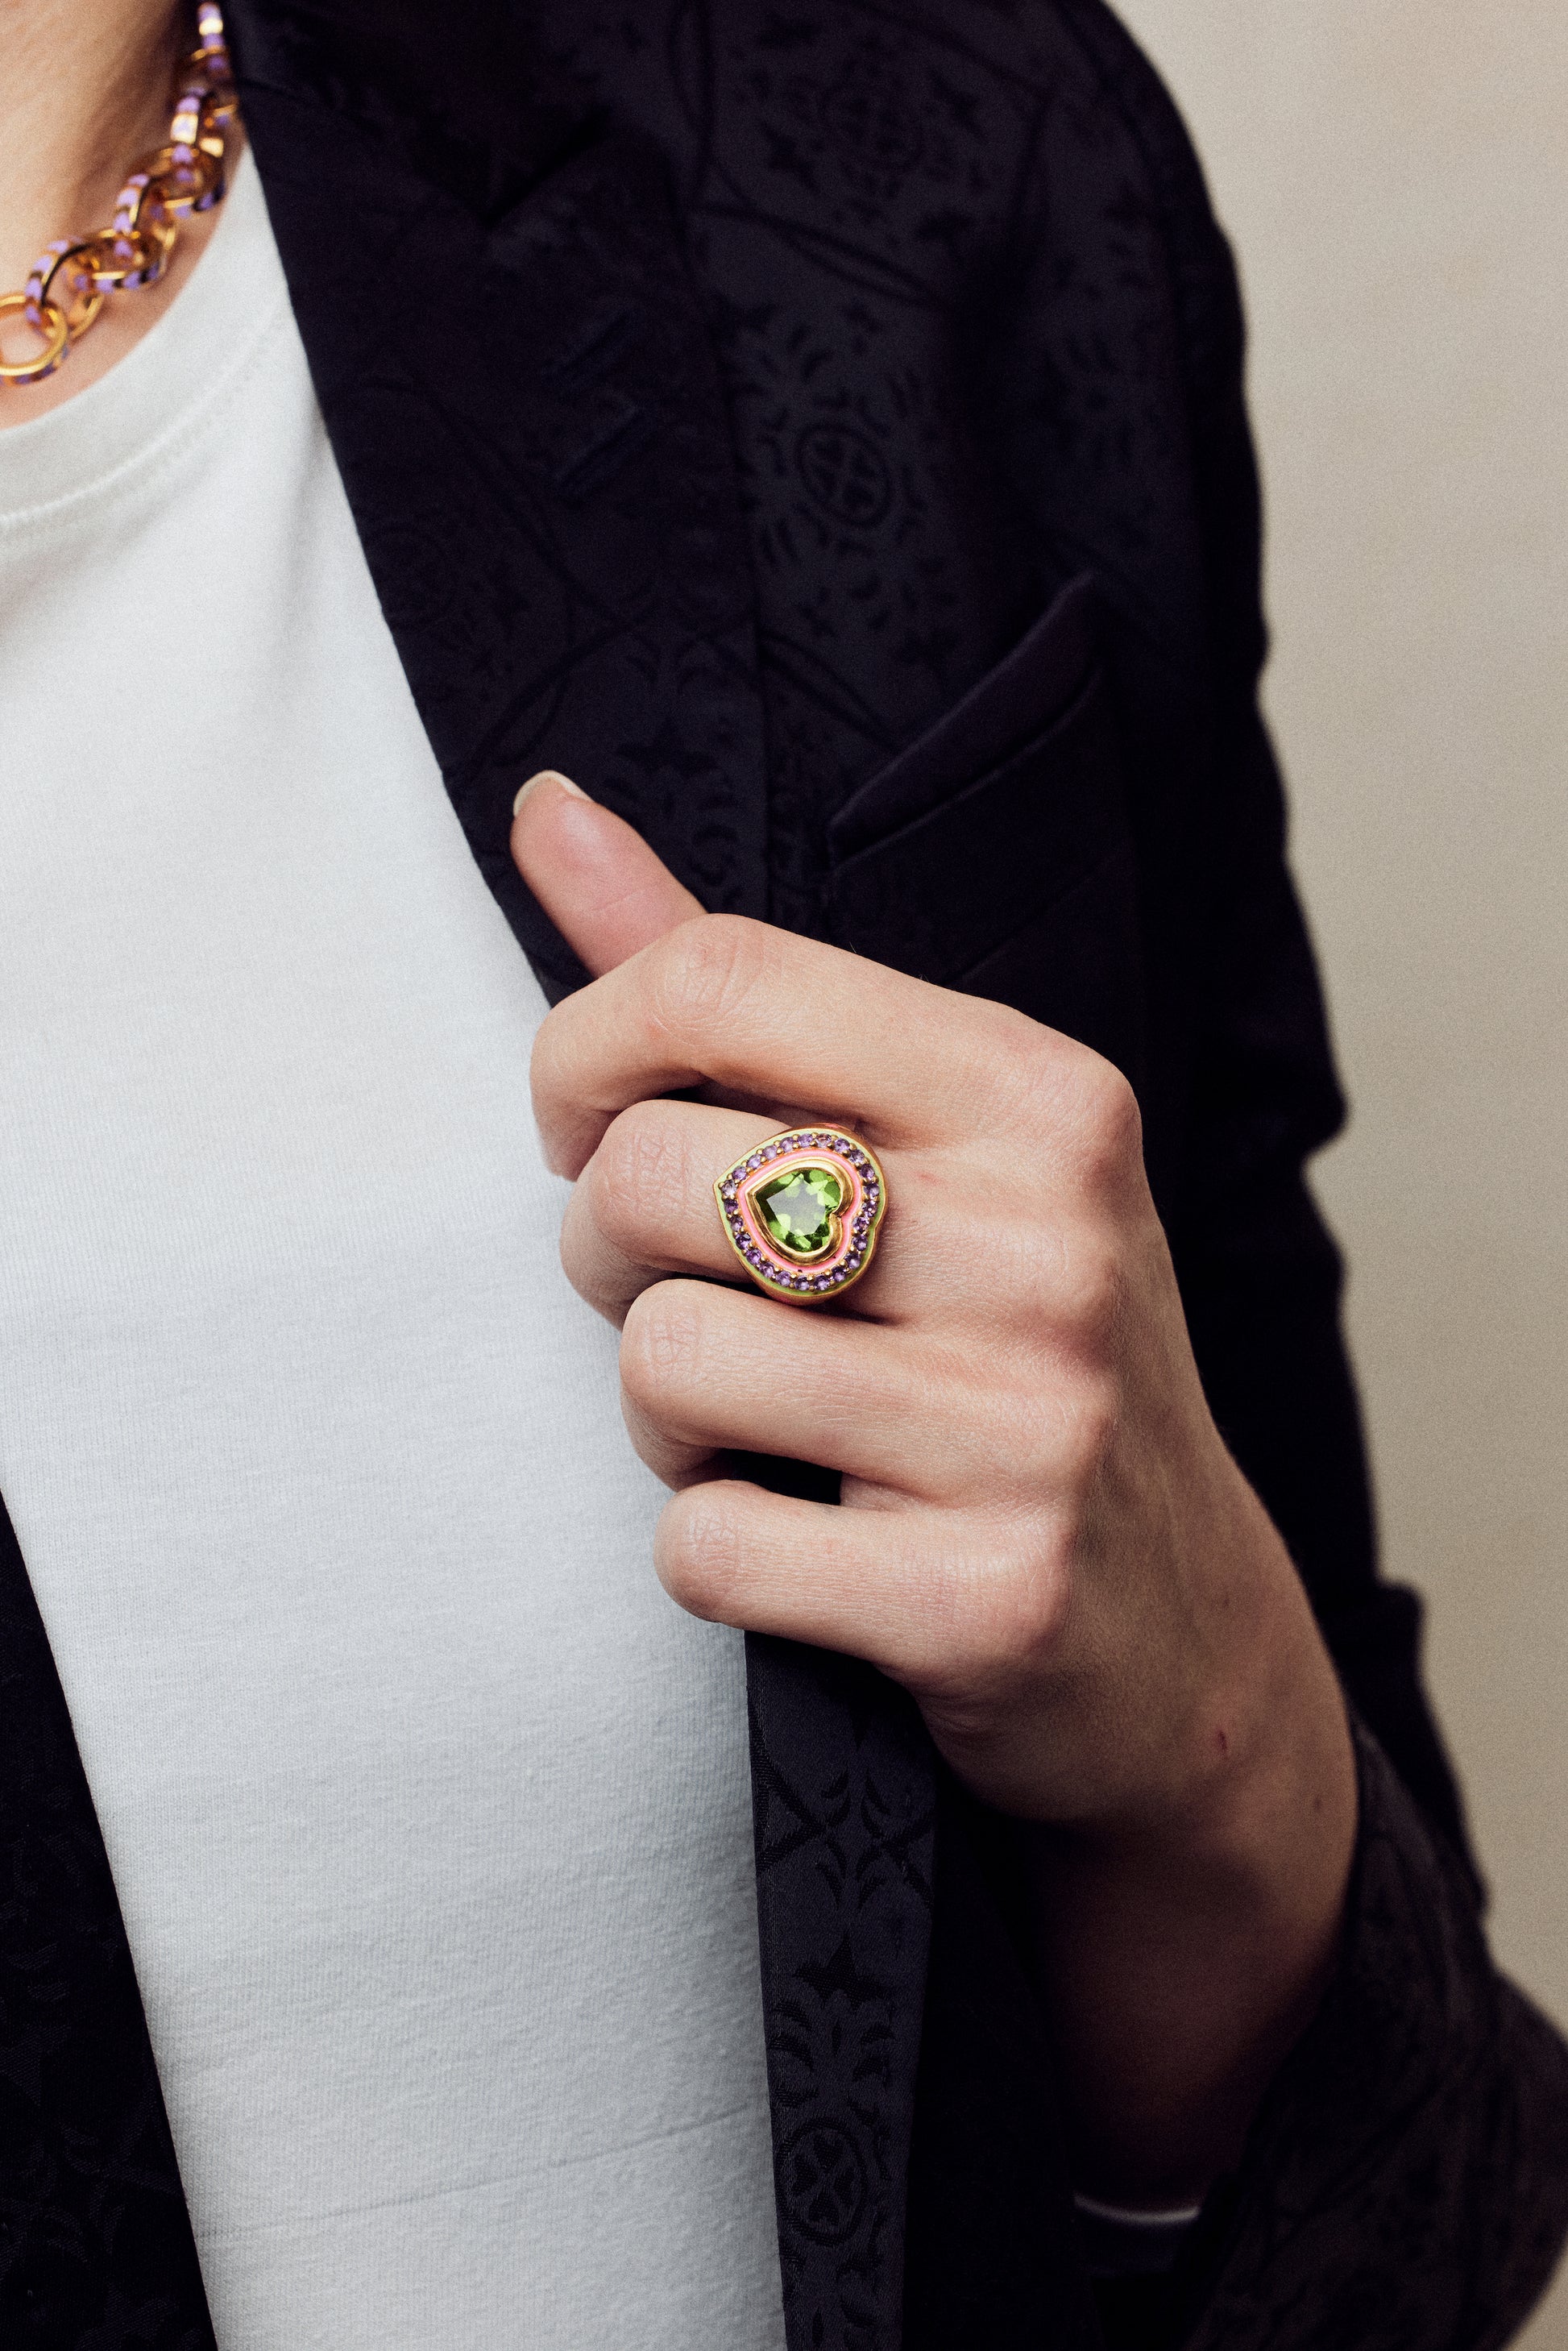 image of firework heart ring on hand holding lapel of black jacket